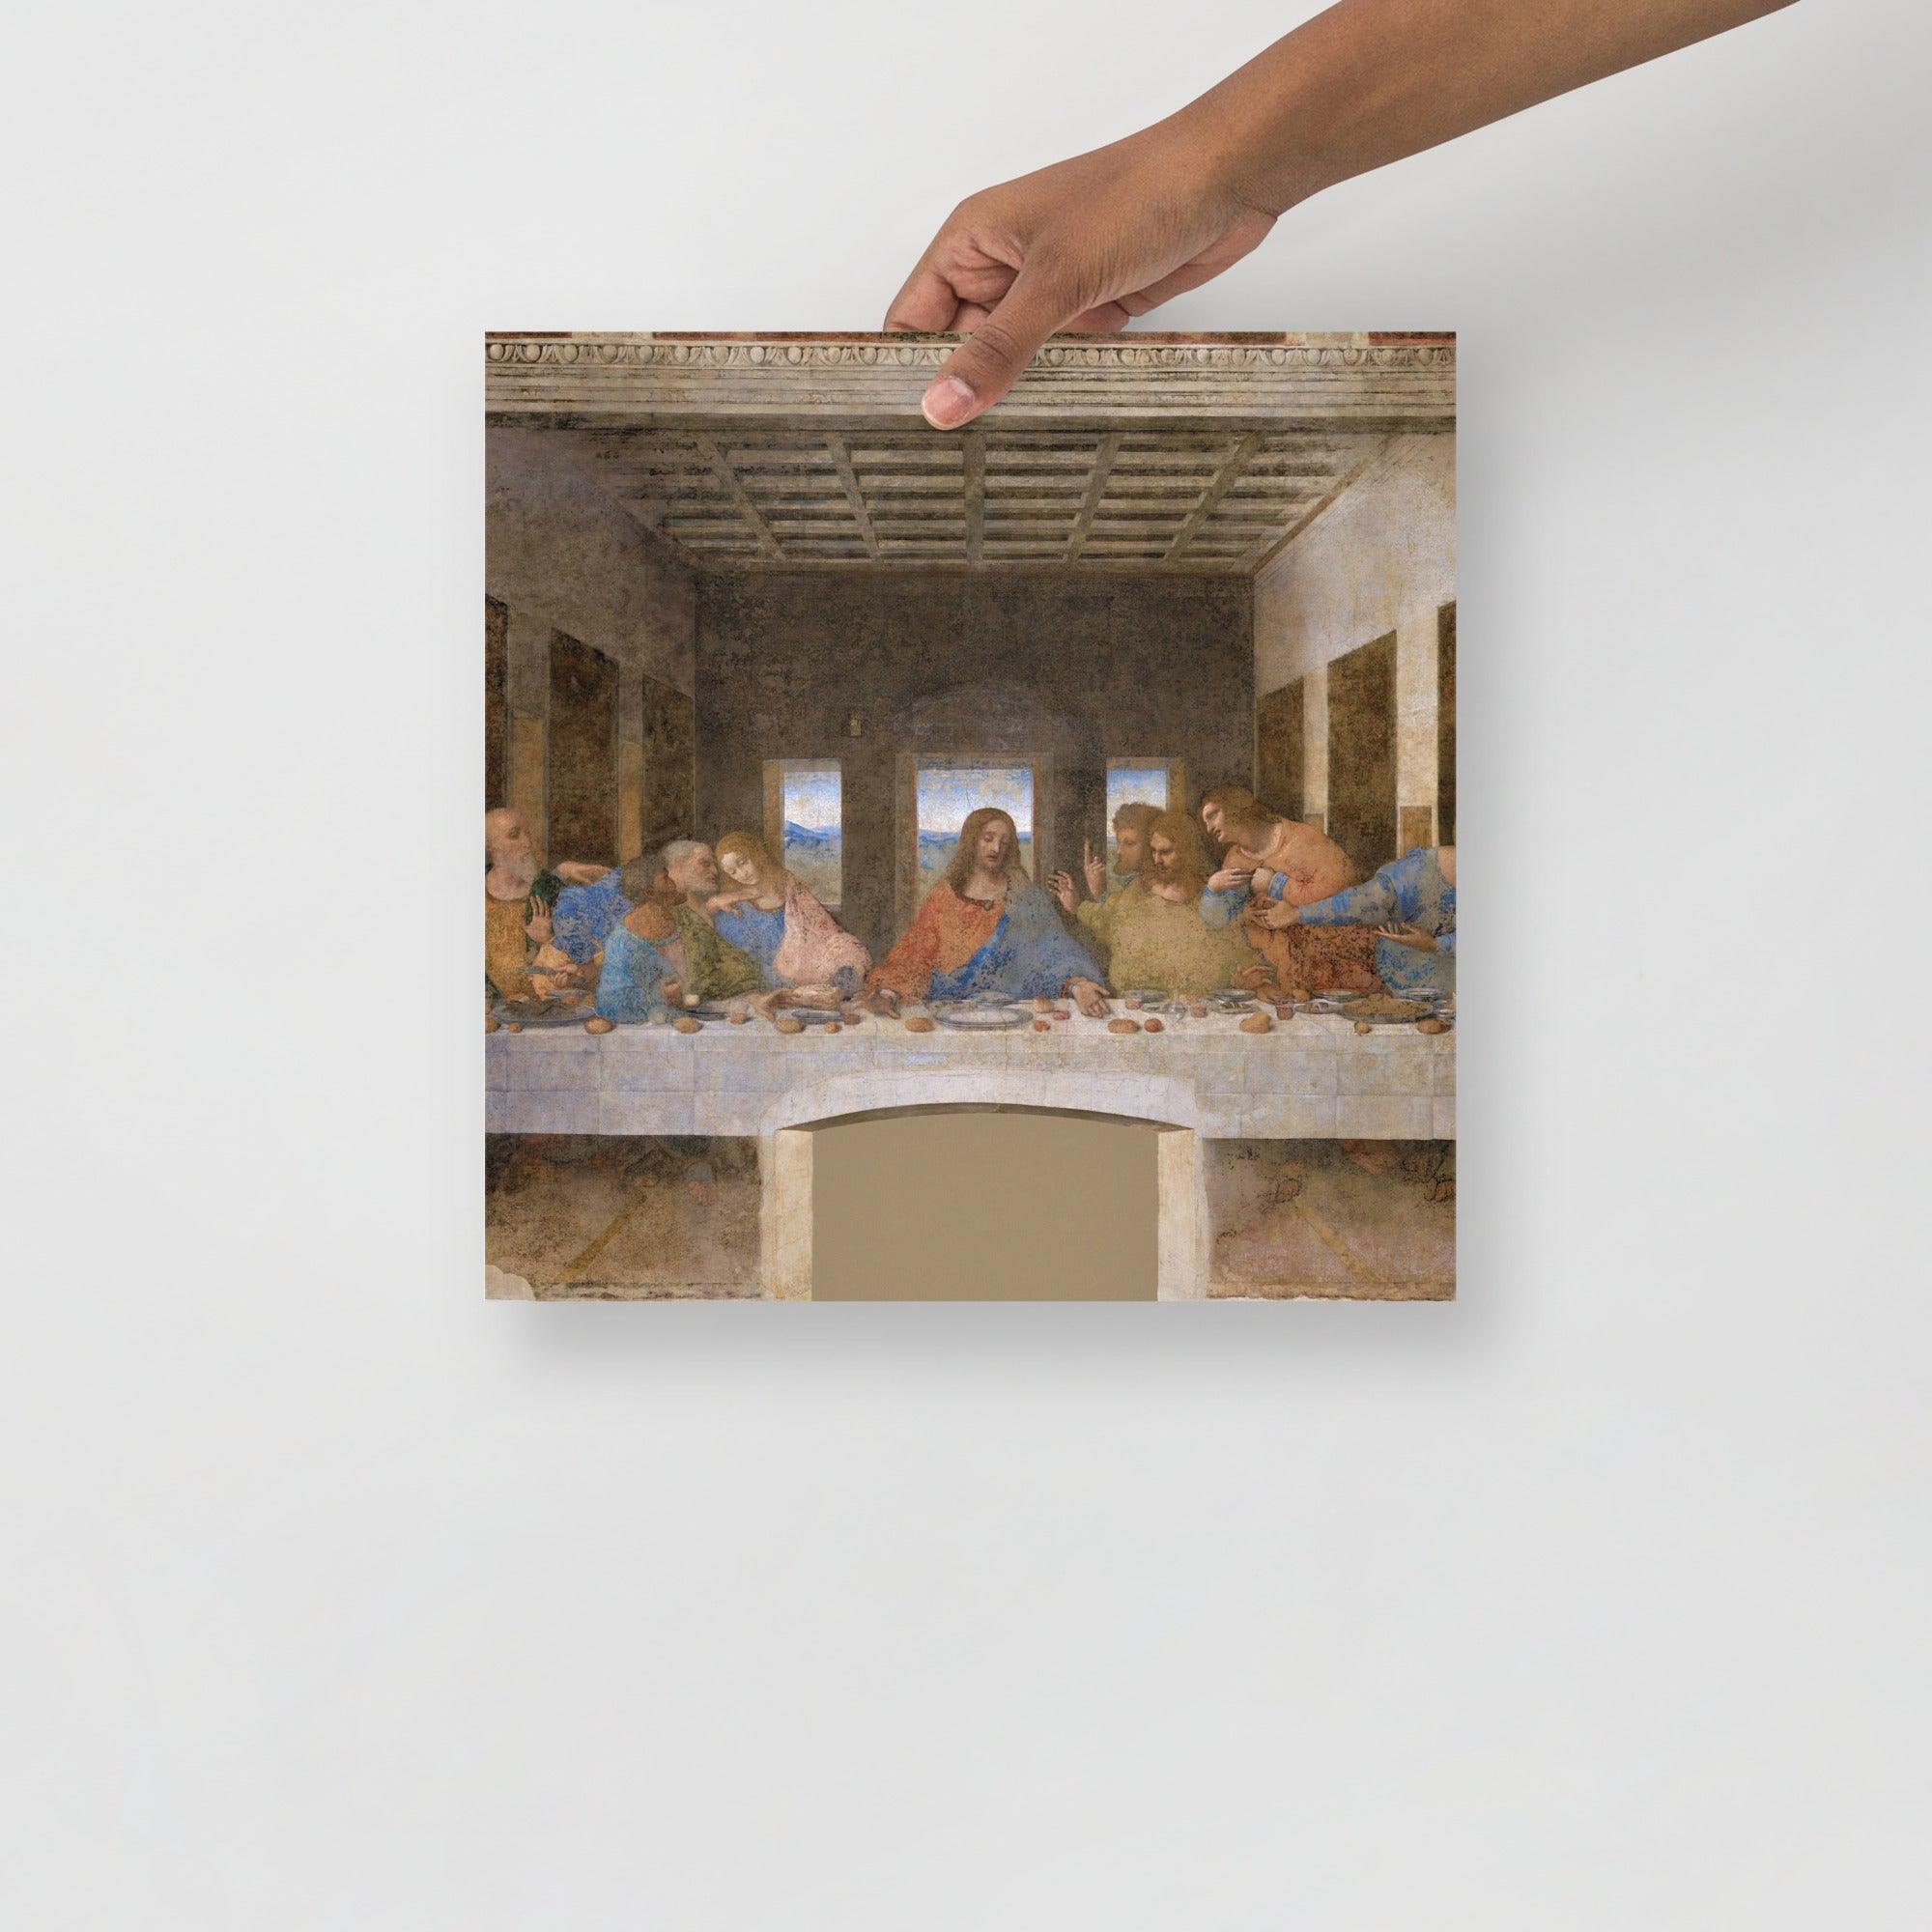 The Last Supper by Leonardo Da Vinci poster on a plain backdrop in size 14x14”.